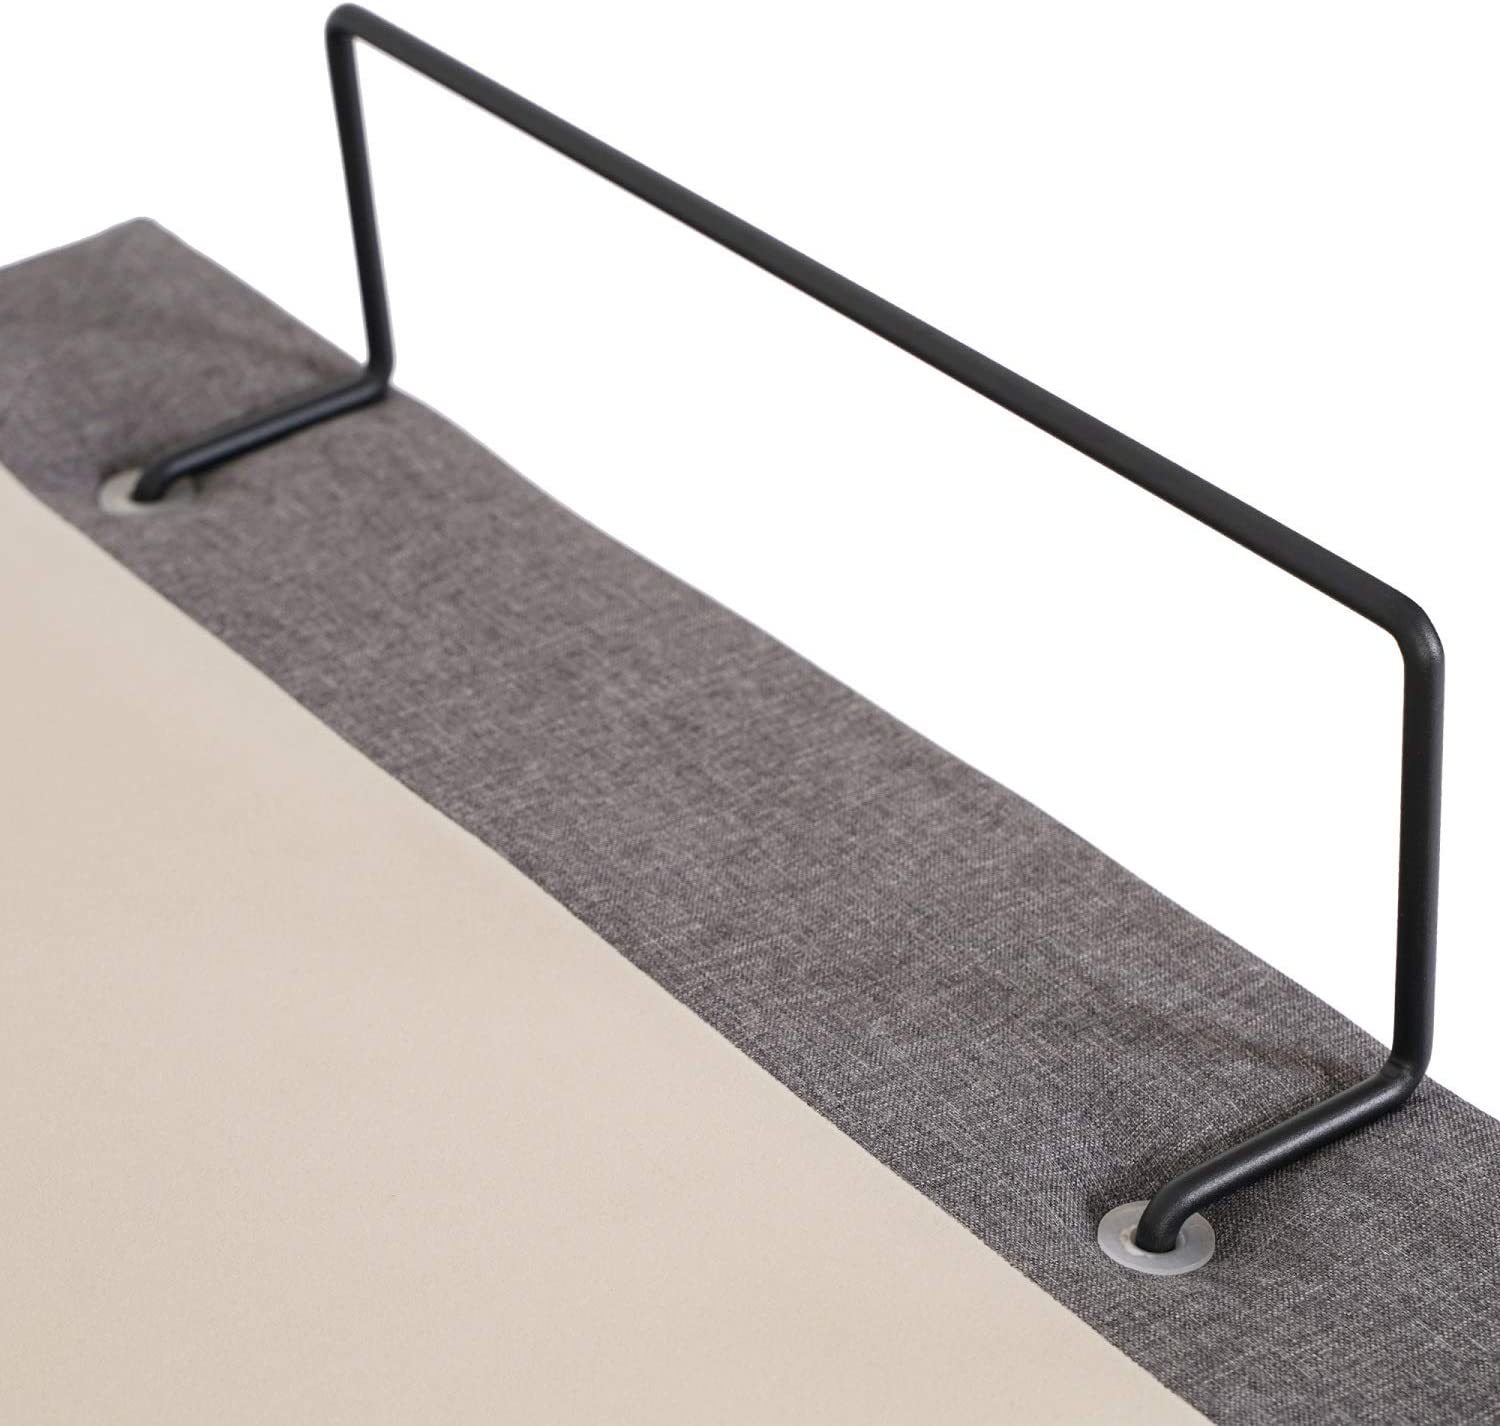 Kamots Beauty Adjustable Bed Review - Mattress retainer bar